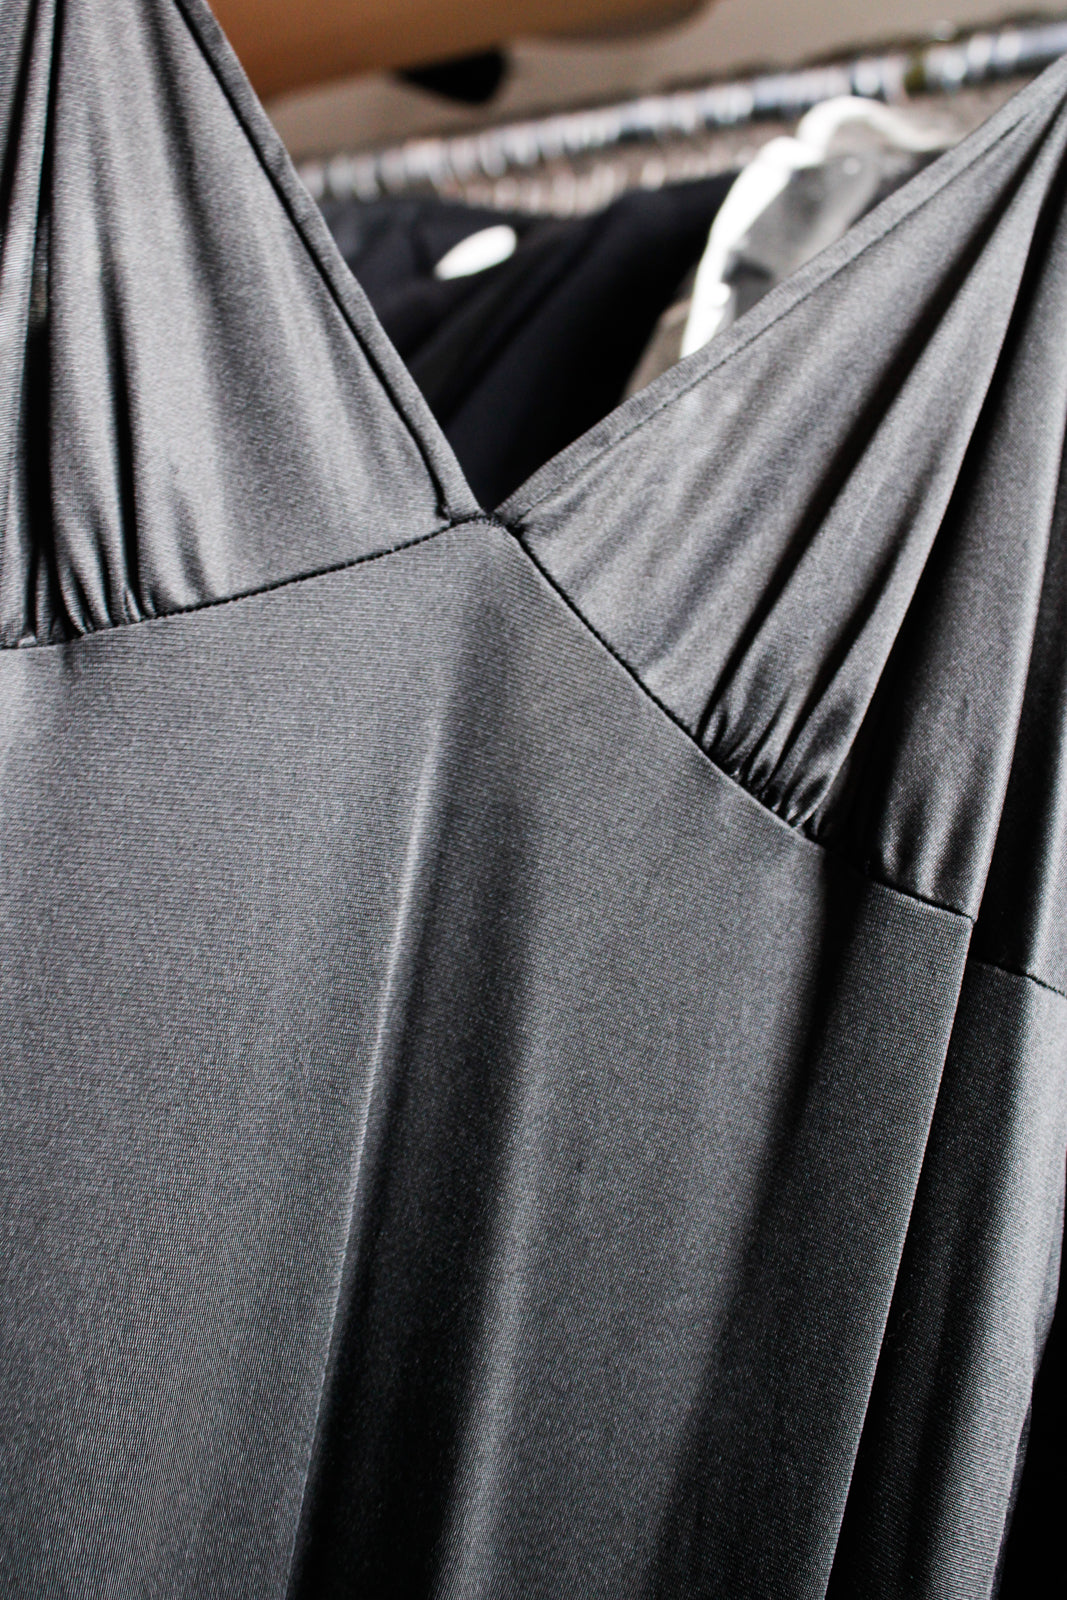 1970s Long Black Nylon Gown - Medium